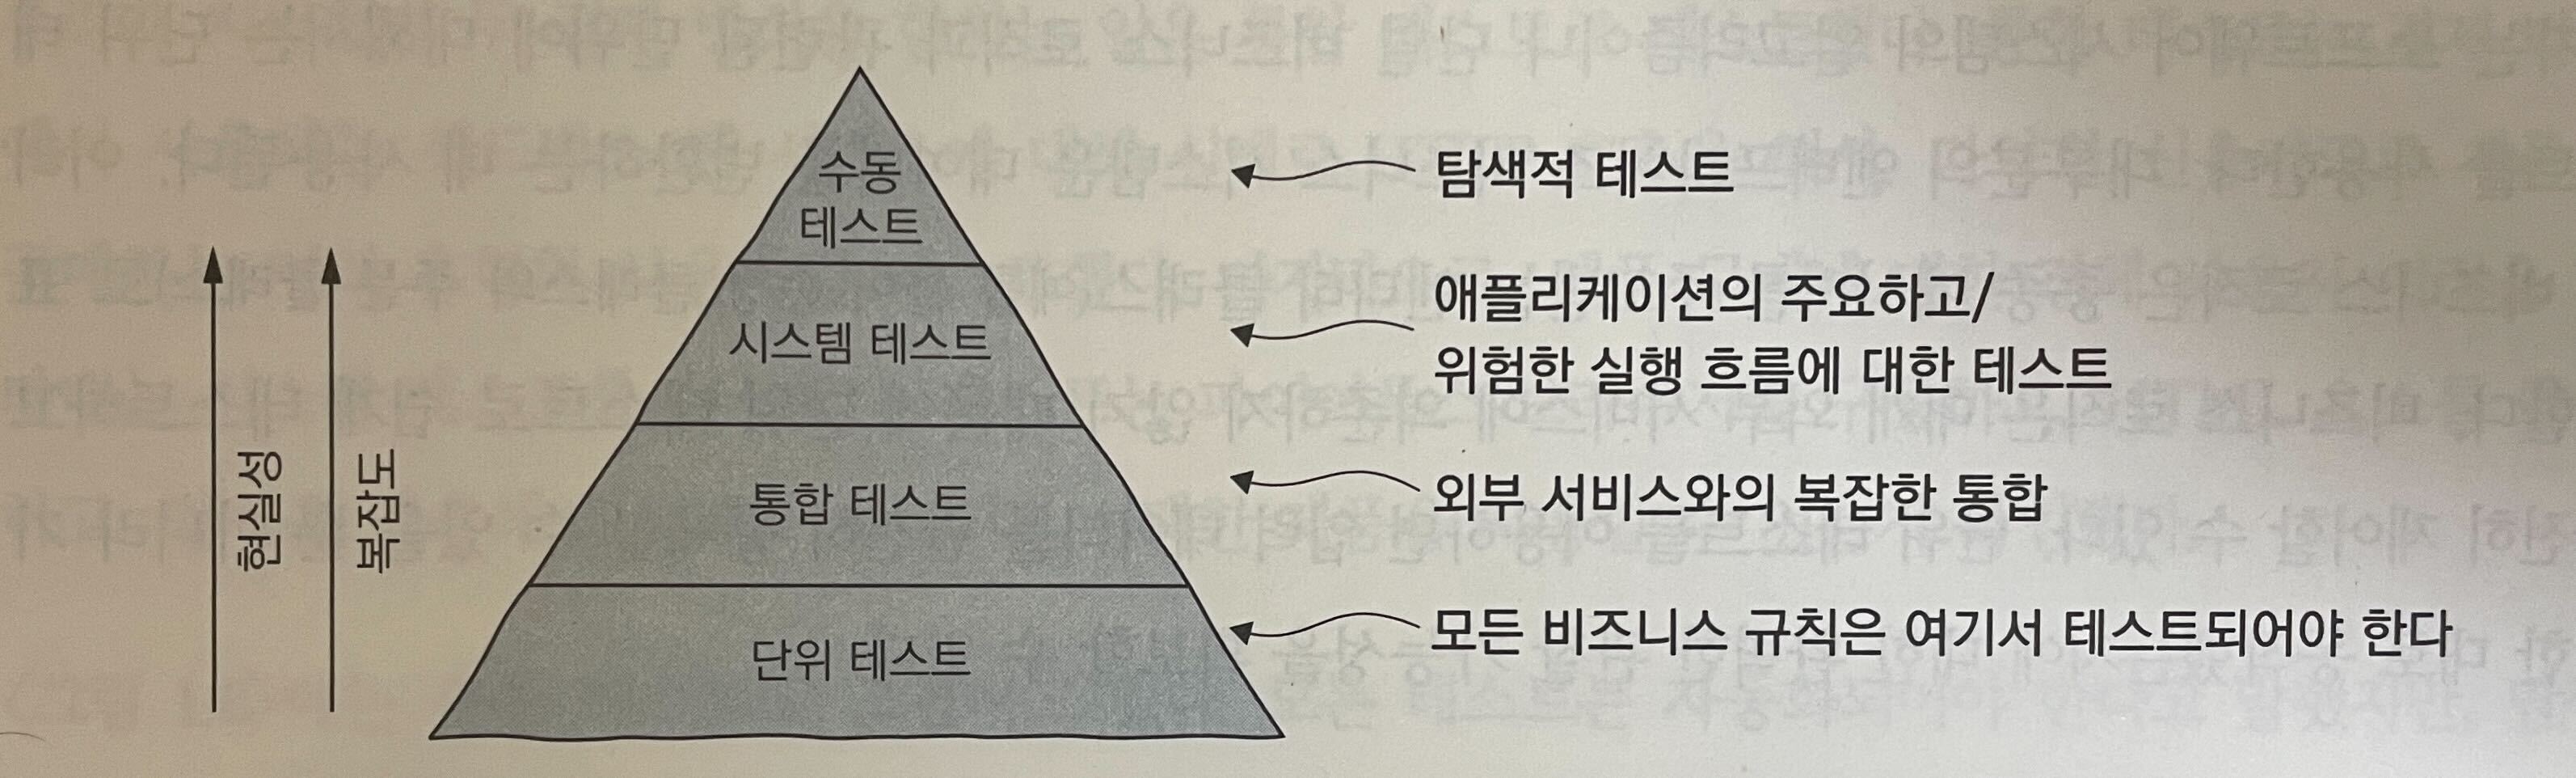 test-pyramid